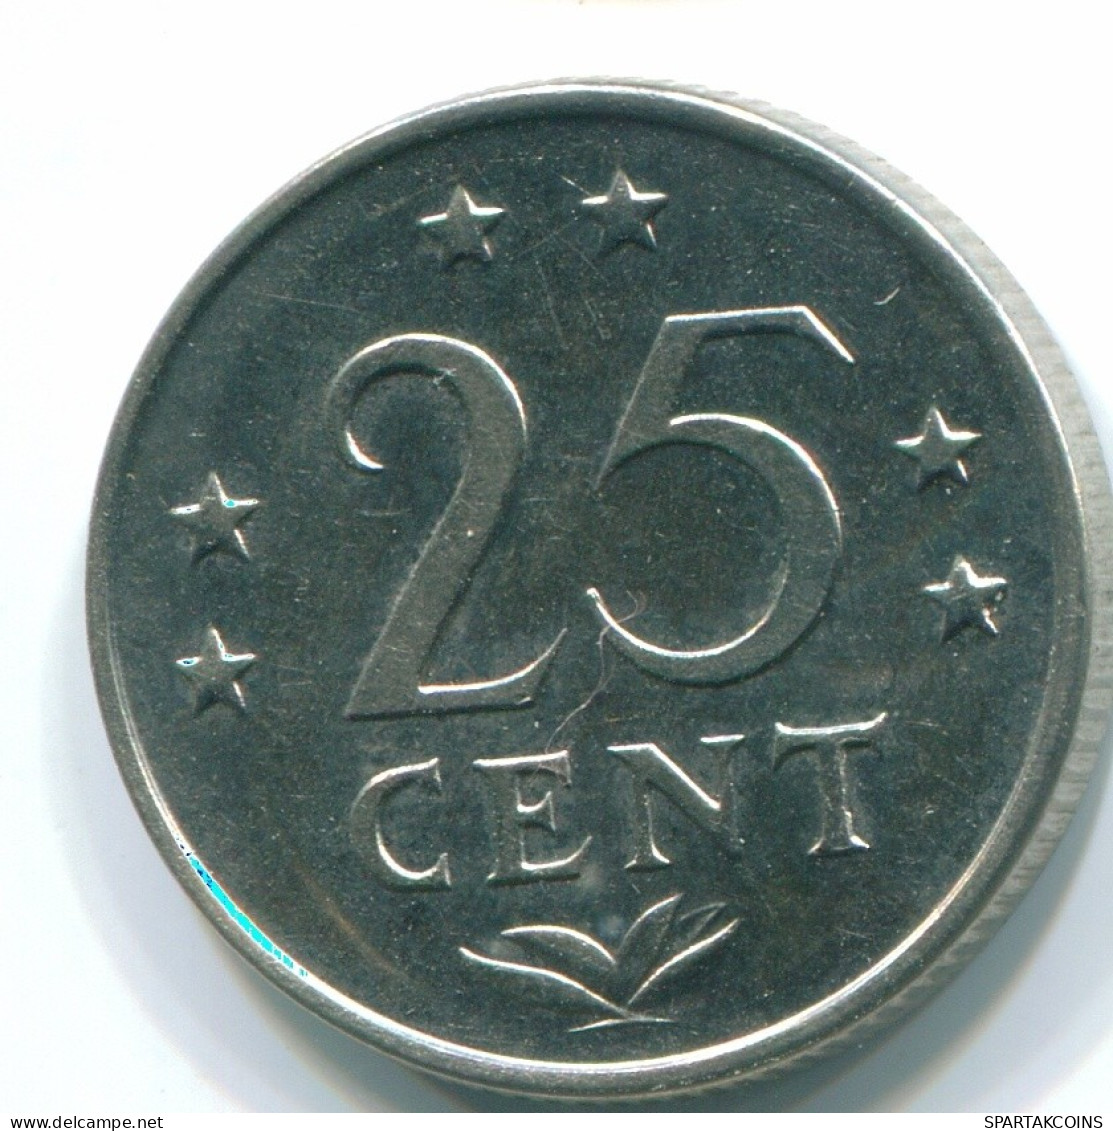 25 CENTS 1971 NETHERLANDS ANTILLES Nickel Colonial Coin #S11576.U.A - Antilles Néerlandaises